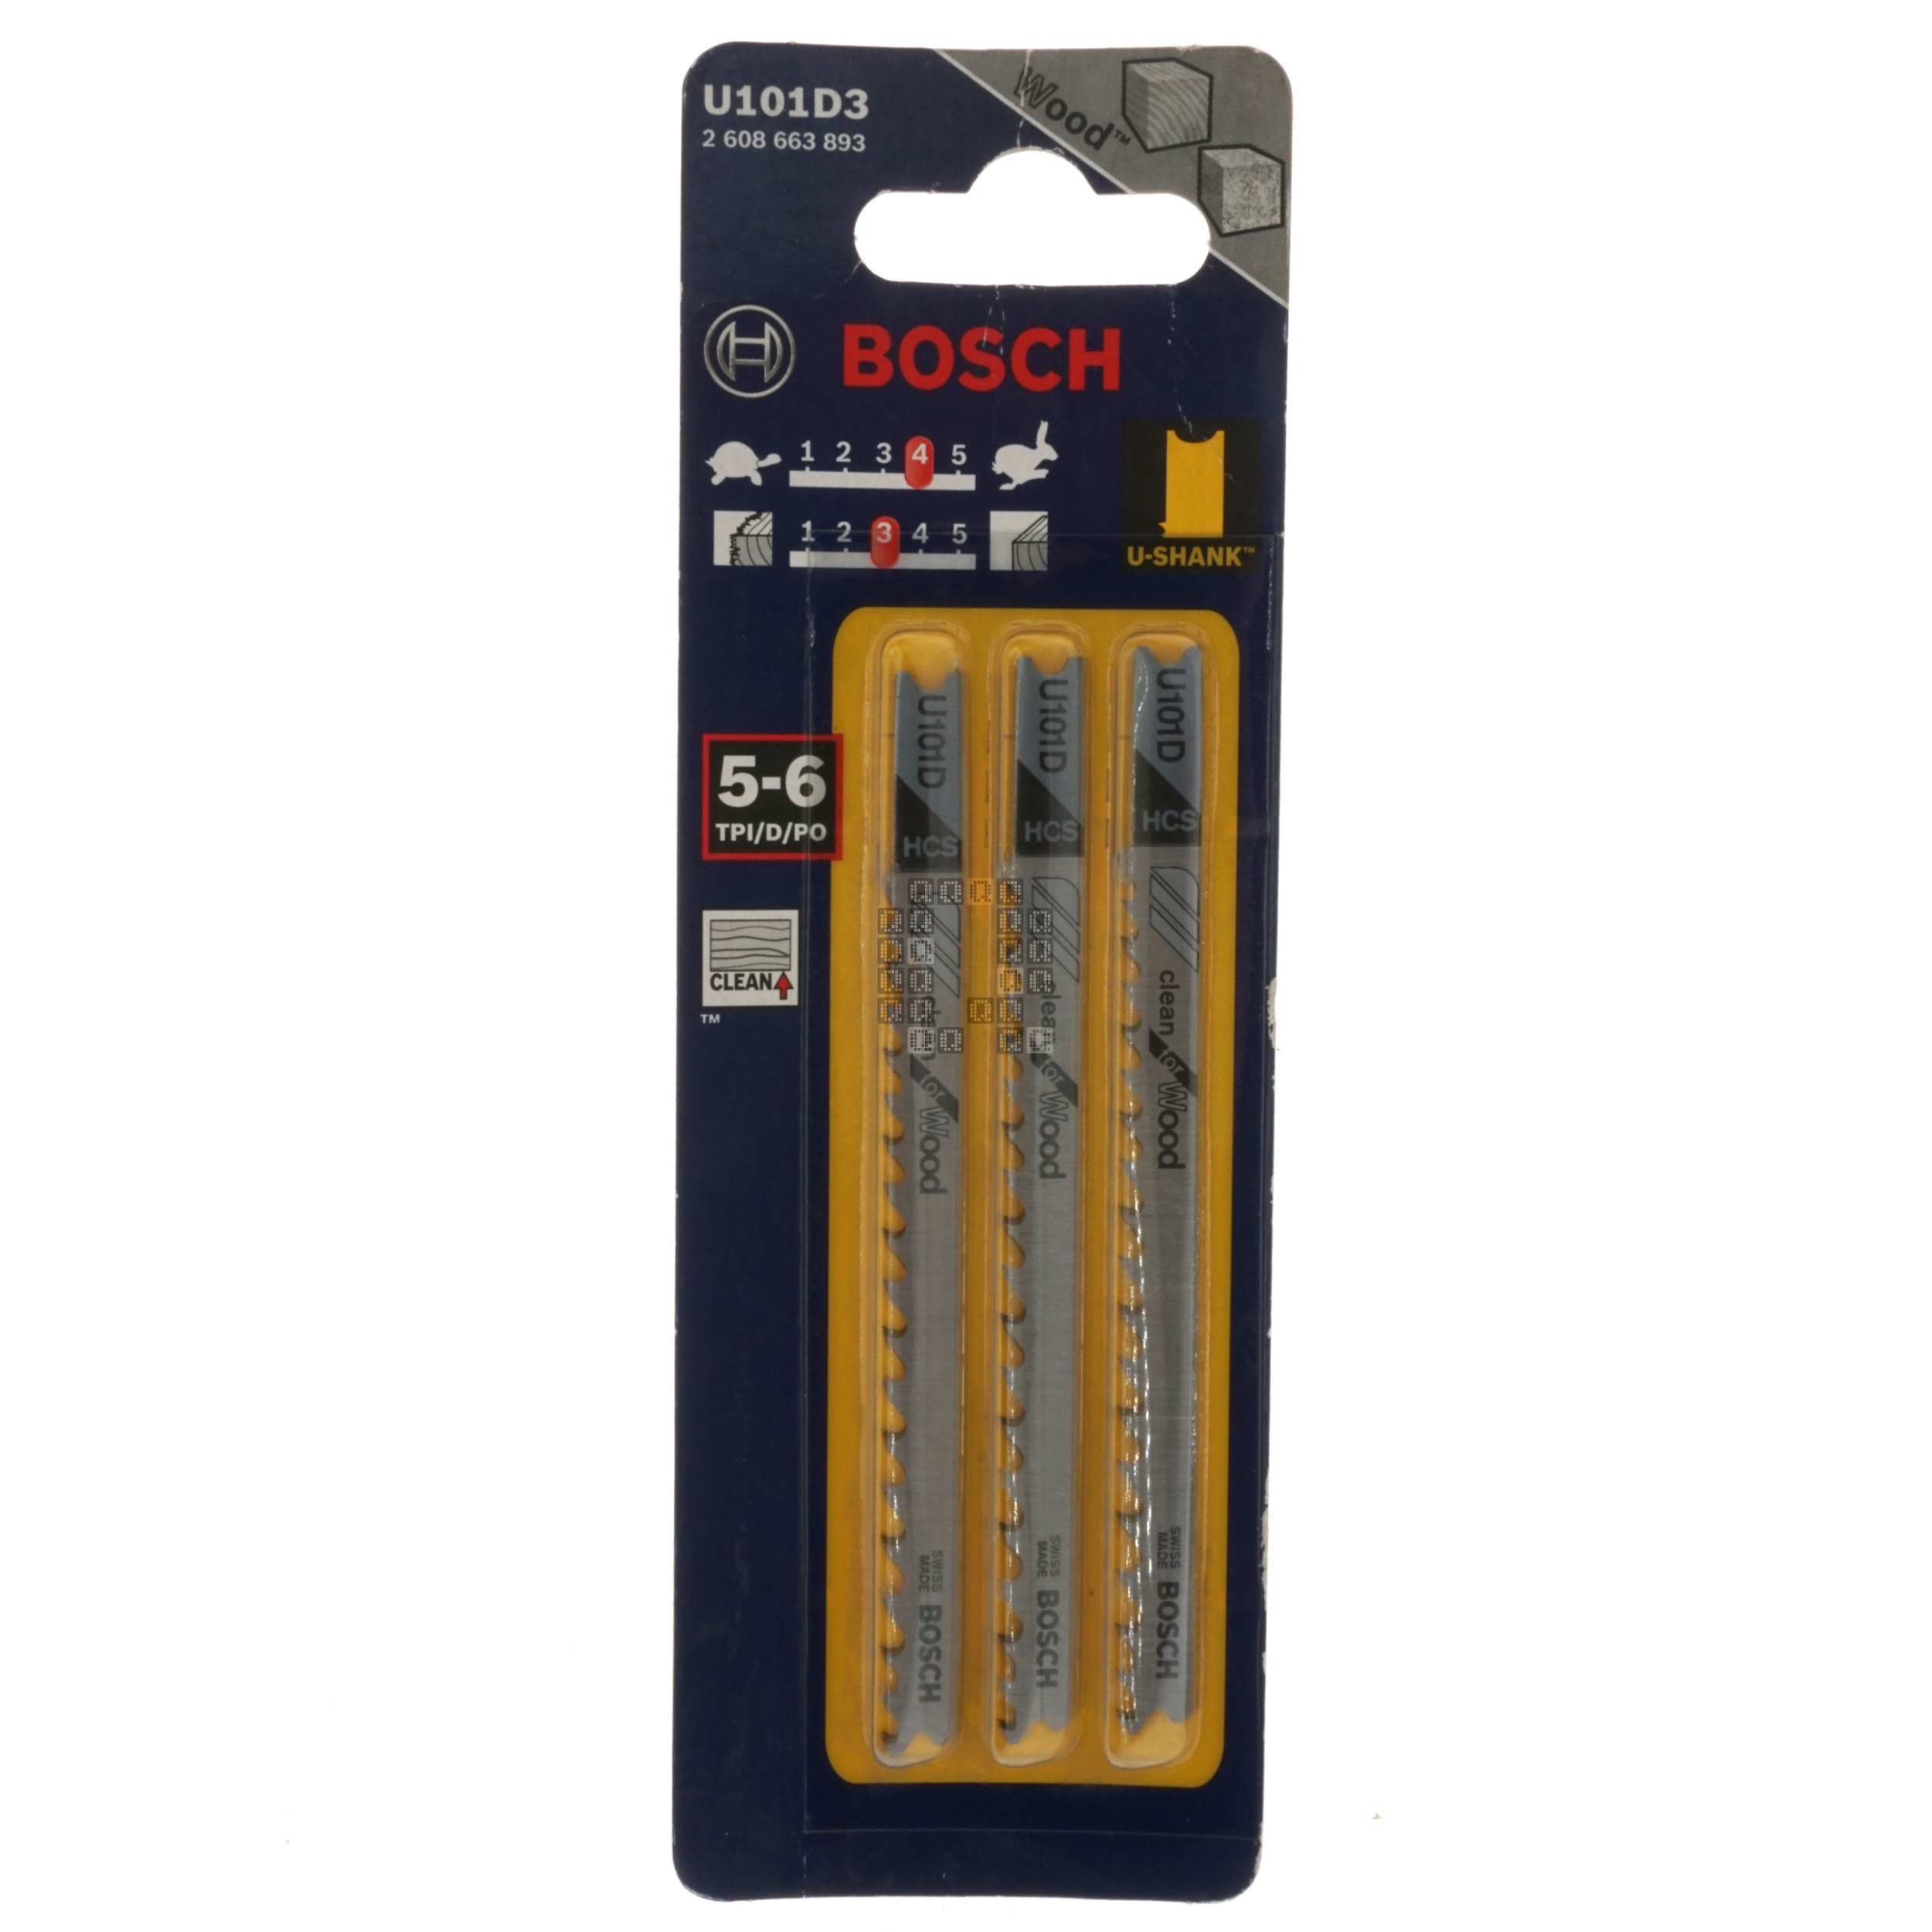 Bosch U101D3 2608663893 Clean Wood U-Shank High Carbon Steel Jig Saw Blades, 3-5/8" Length, 3-Pack